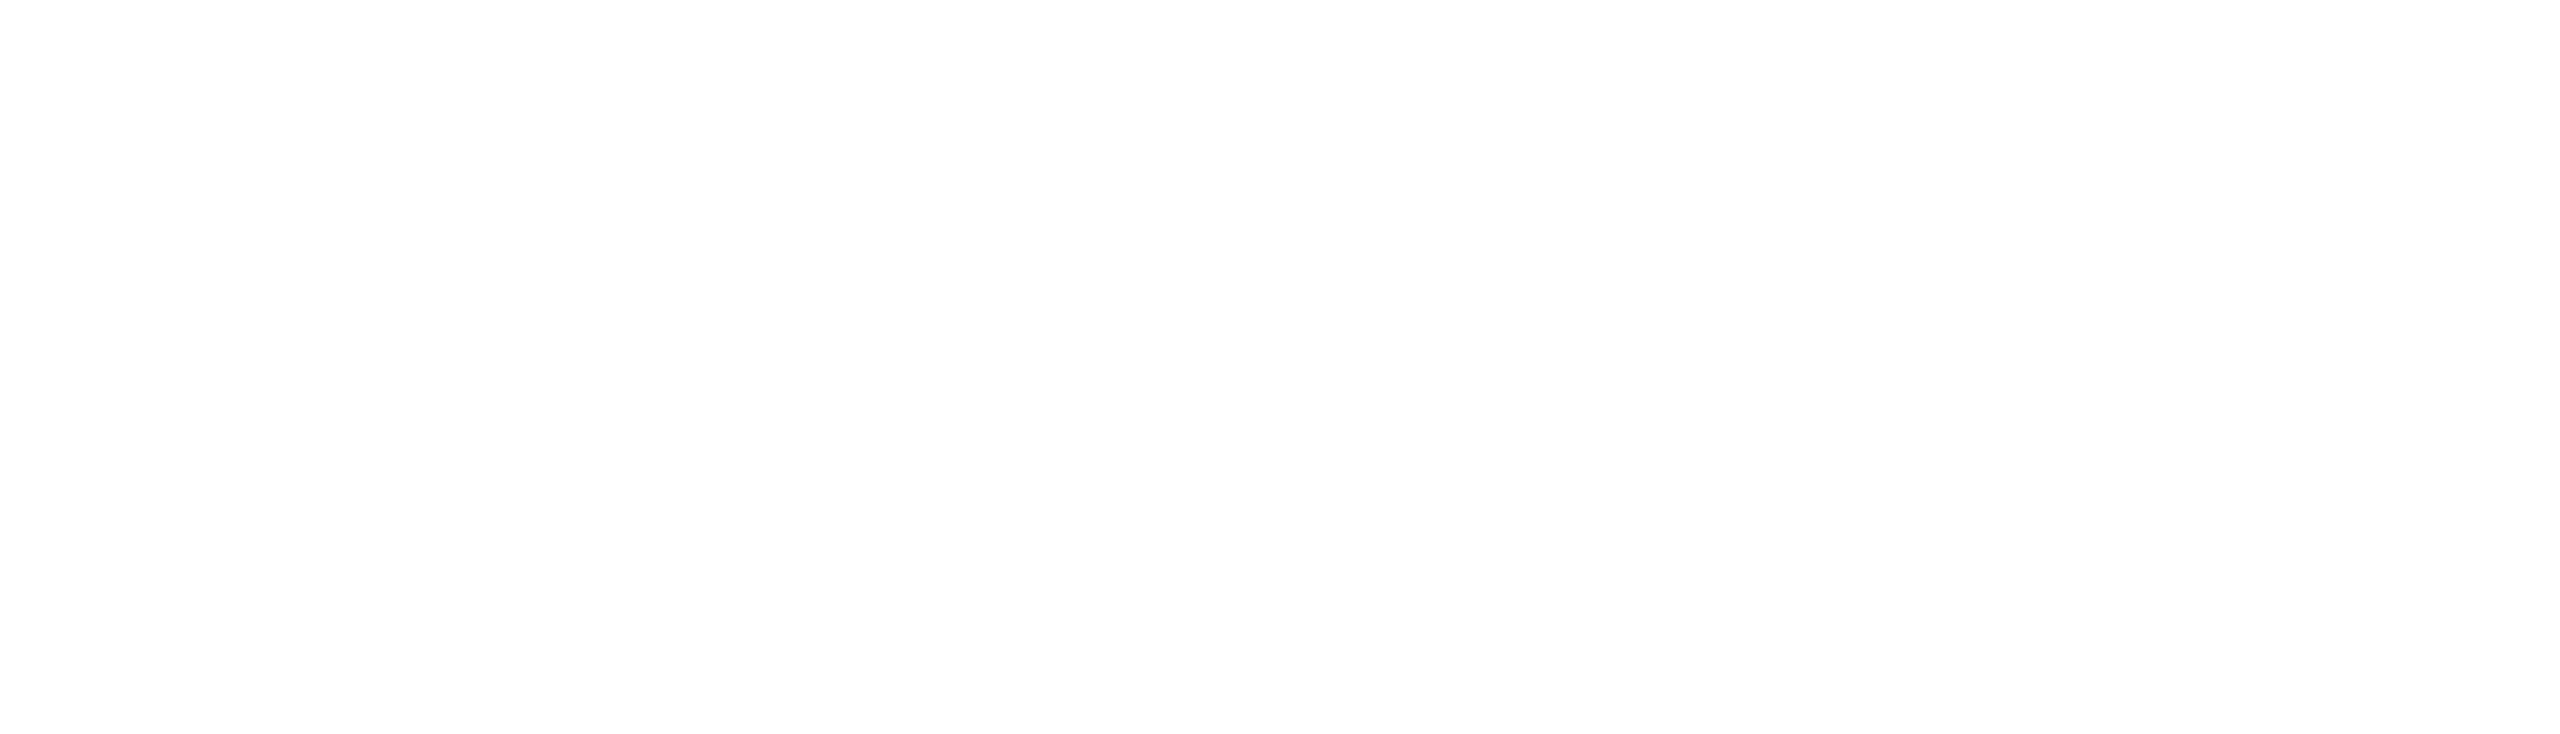 BBC White logo